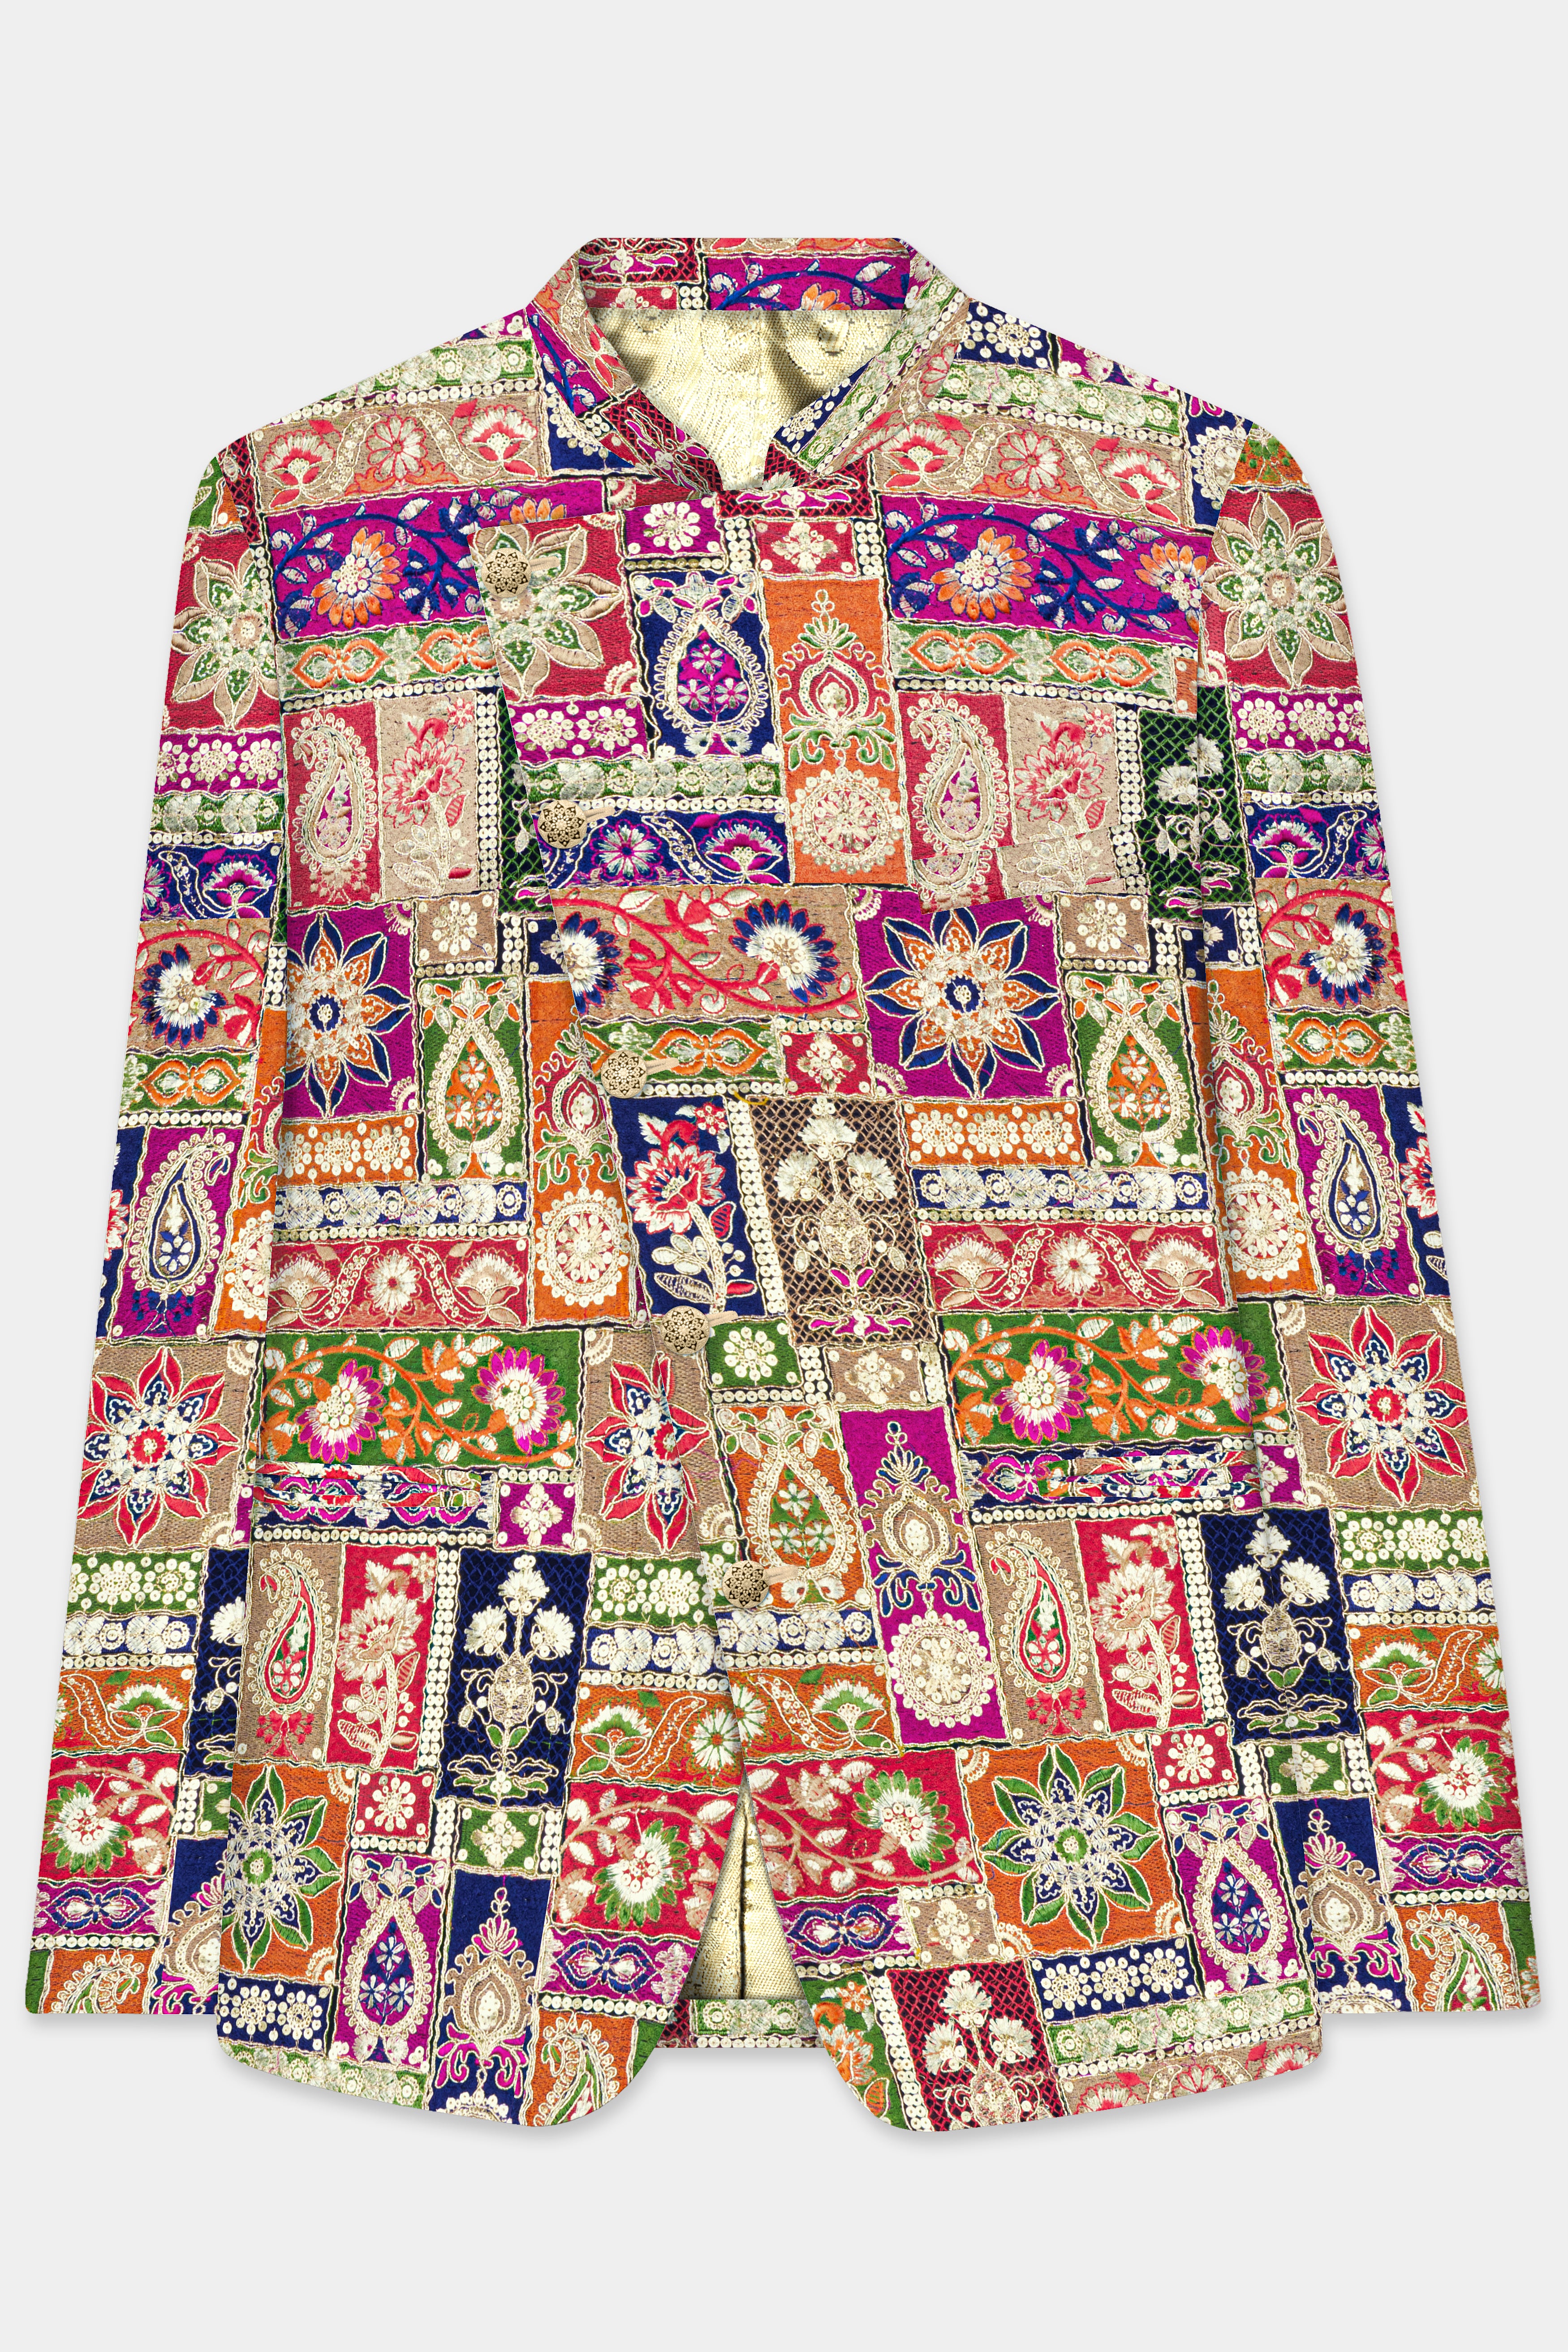 Multicolor Sequin and Heavy Embroidered Thread Work Cross Placket Bandhgala Jodhpuri